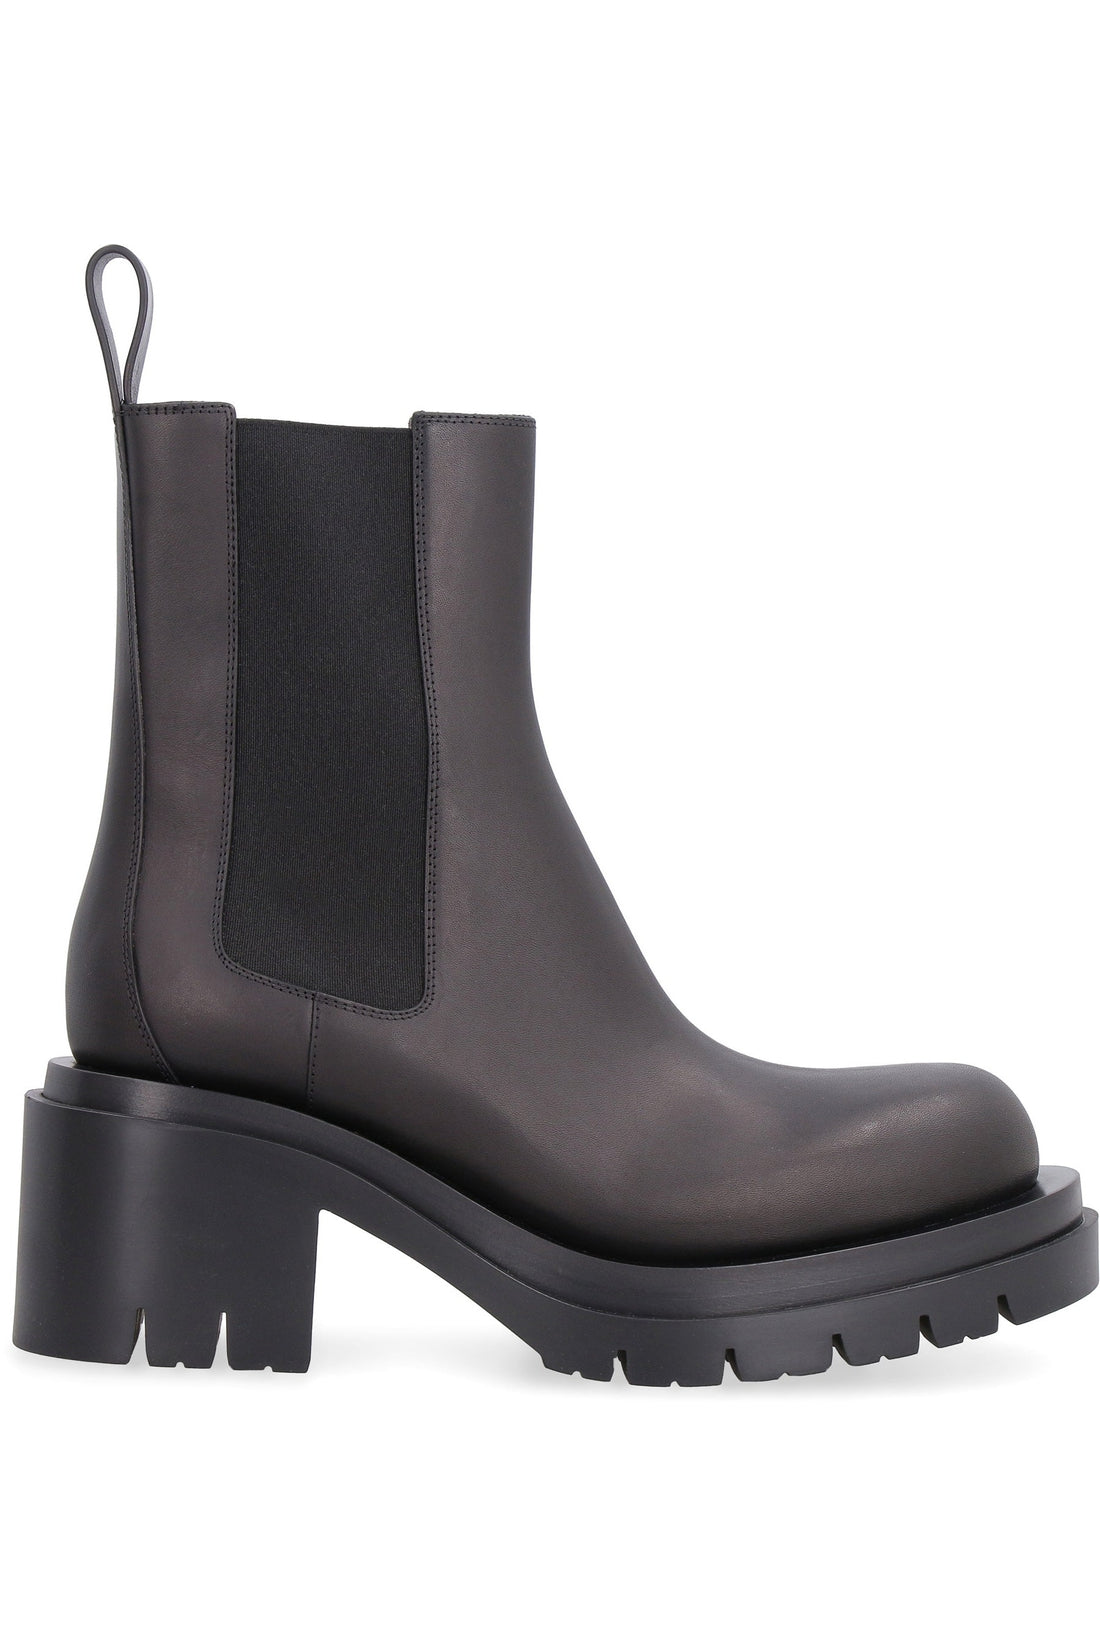 Bottega Veneta-OUTLET-SALE-Lug leather boots-ARCHIVIST